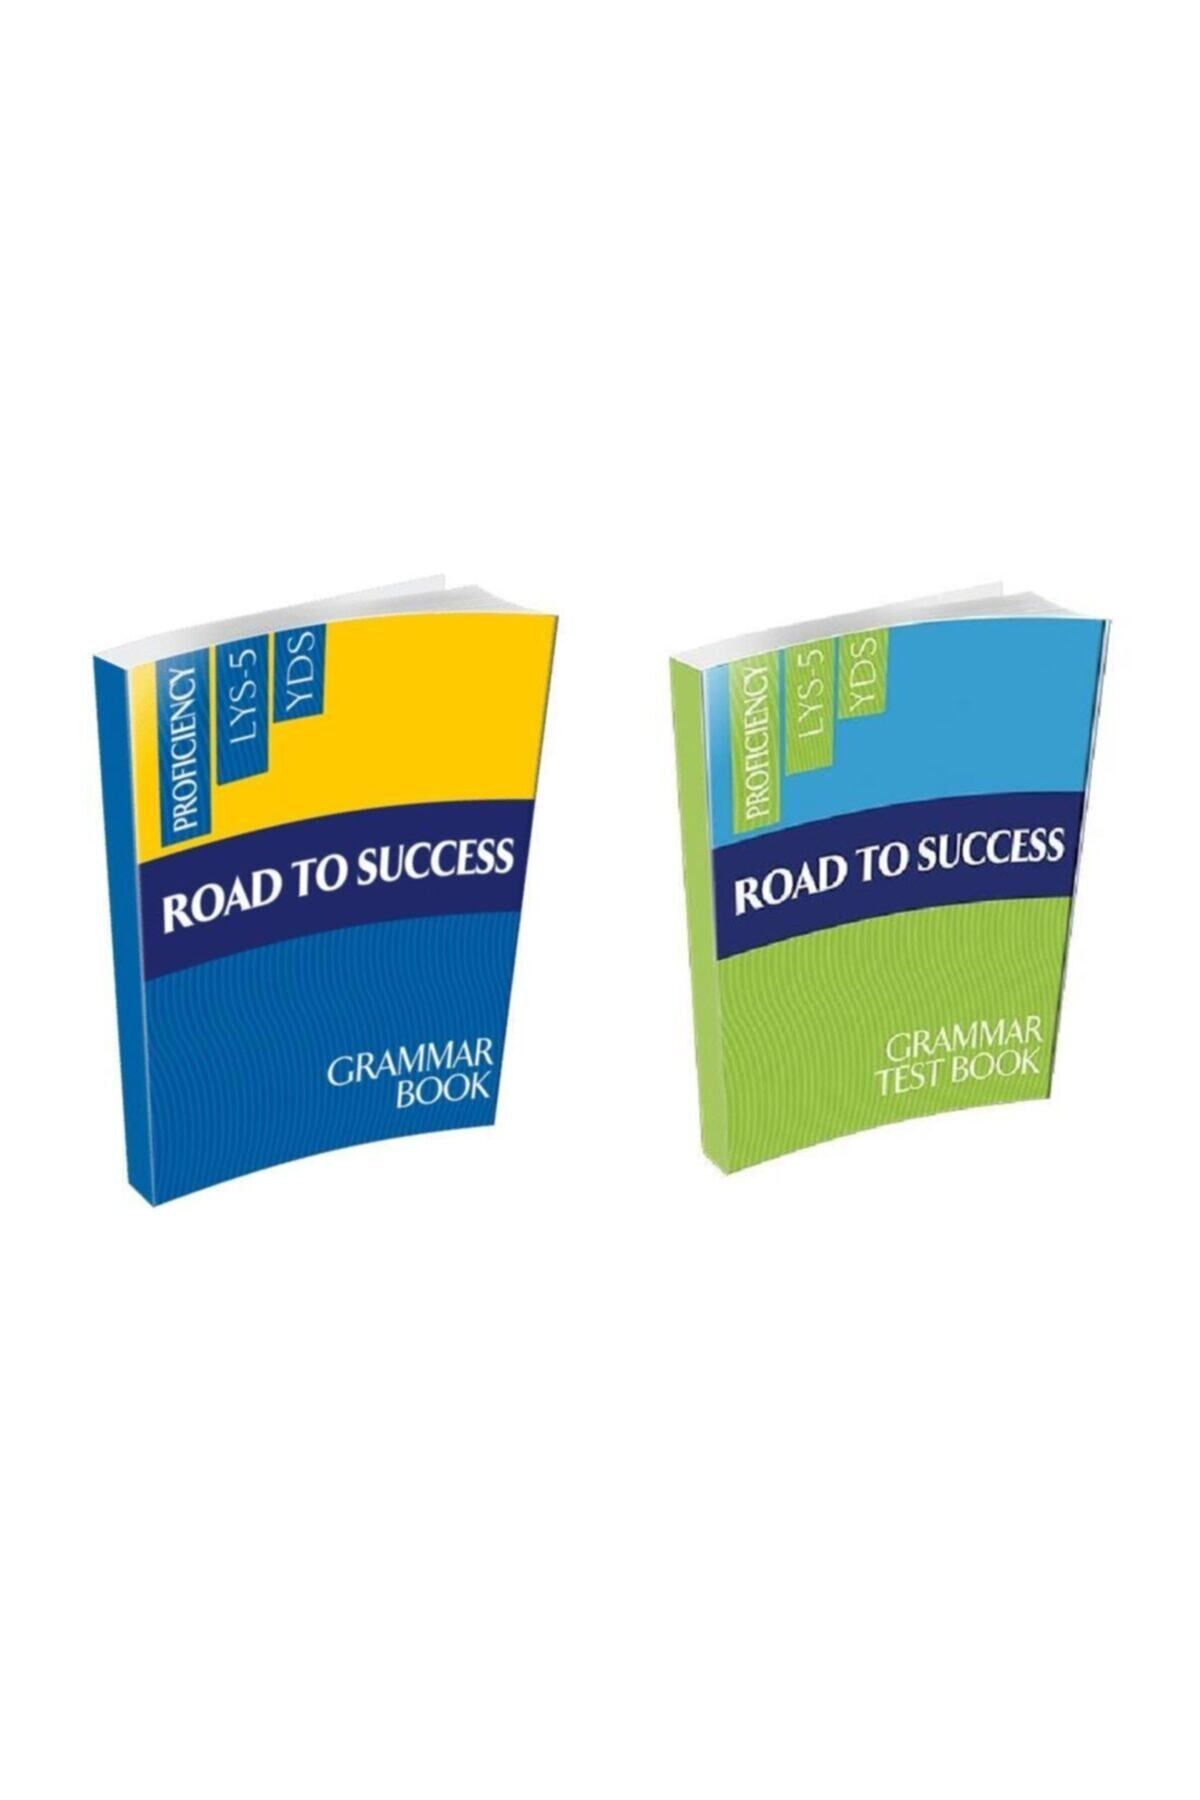 Ydspublishing Yayınları Road To Success Grammar + Grammar Test Book Set